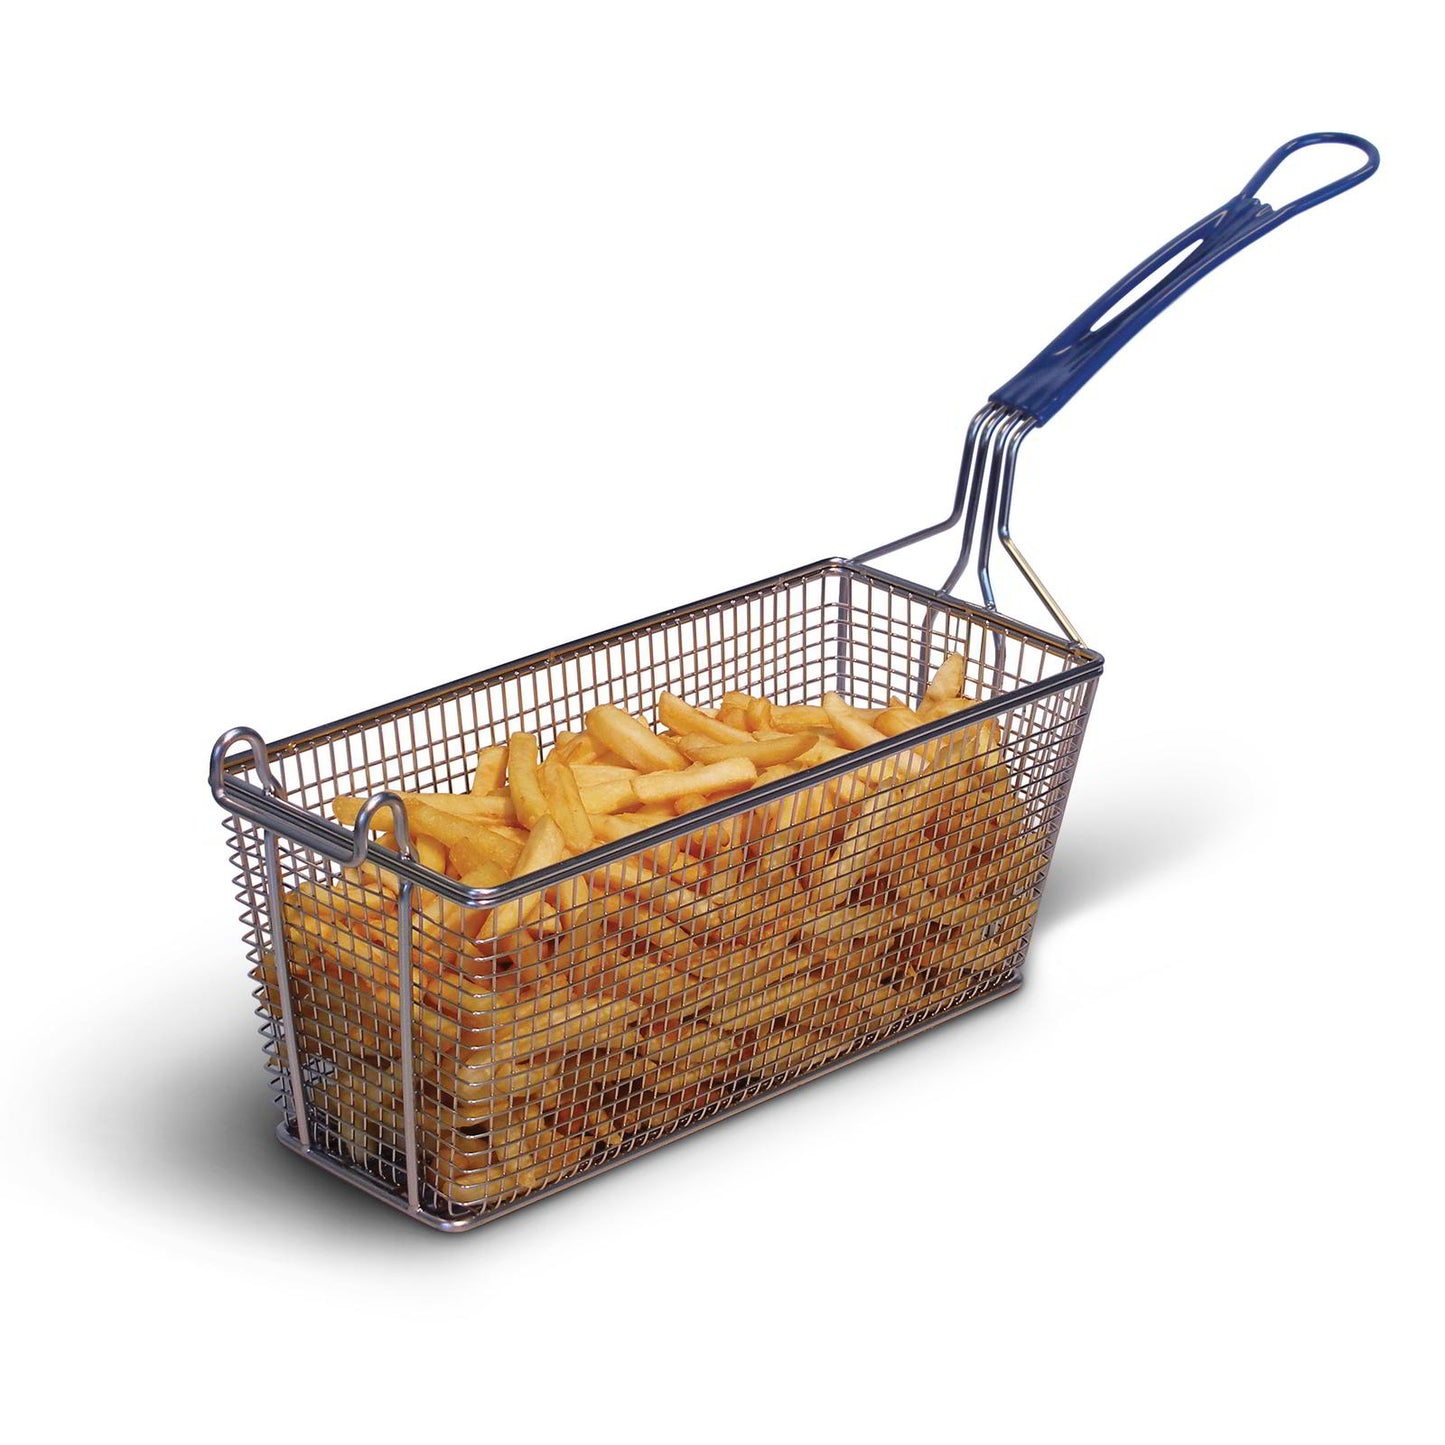 Austheat Freestanding Electric Fryer, 2 baskets